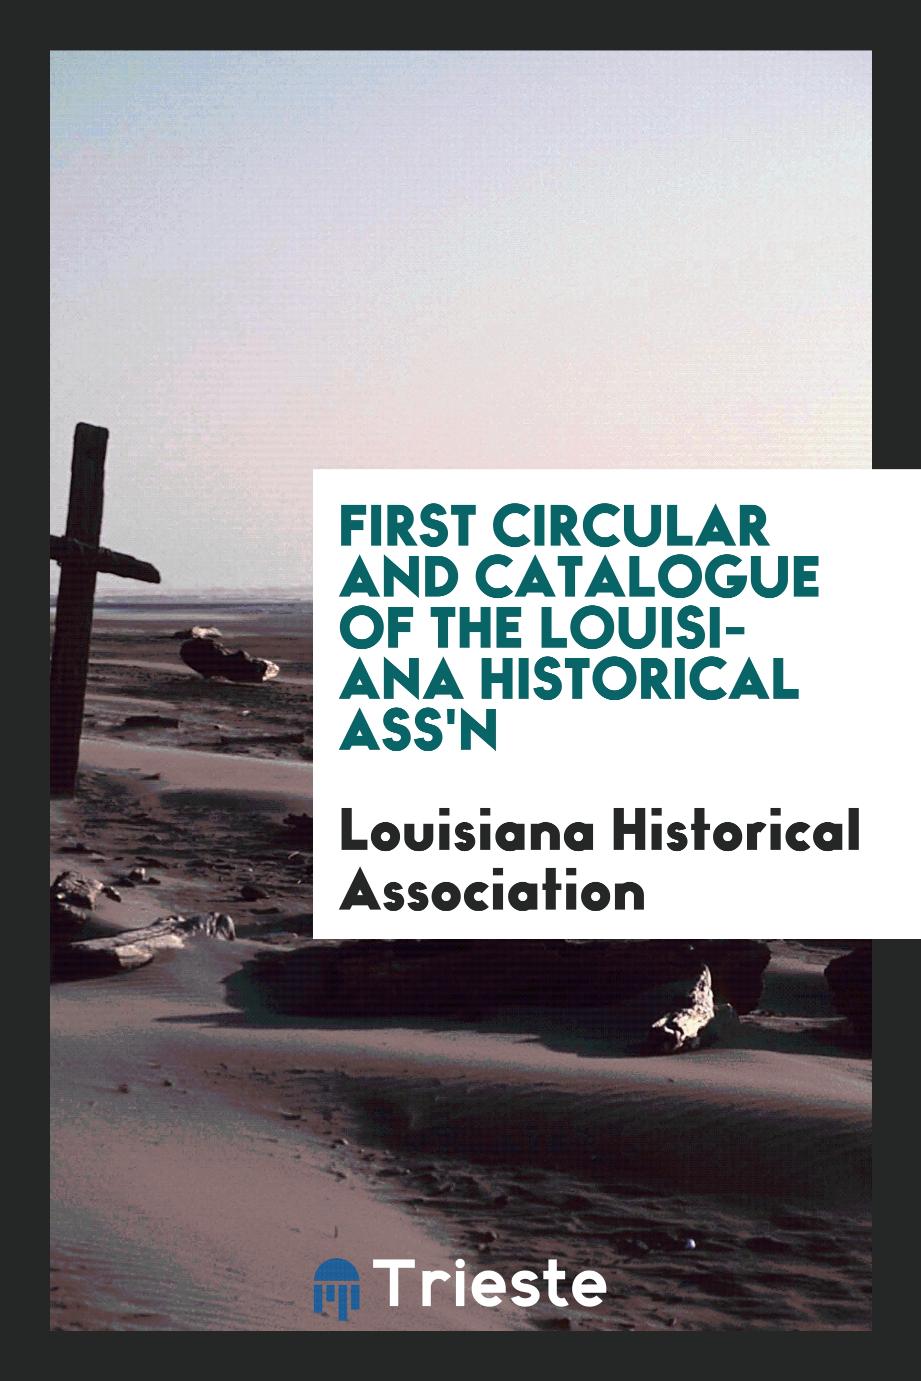 First Circular and Catalogue of the Louisiana Historical Ass'n